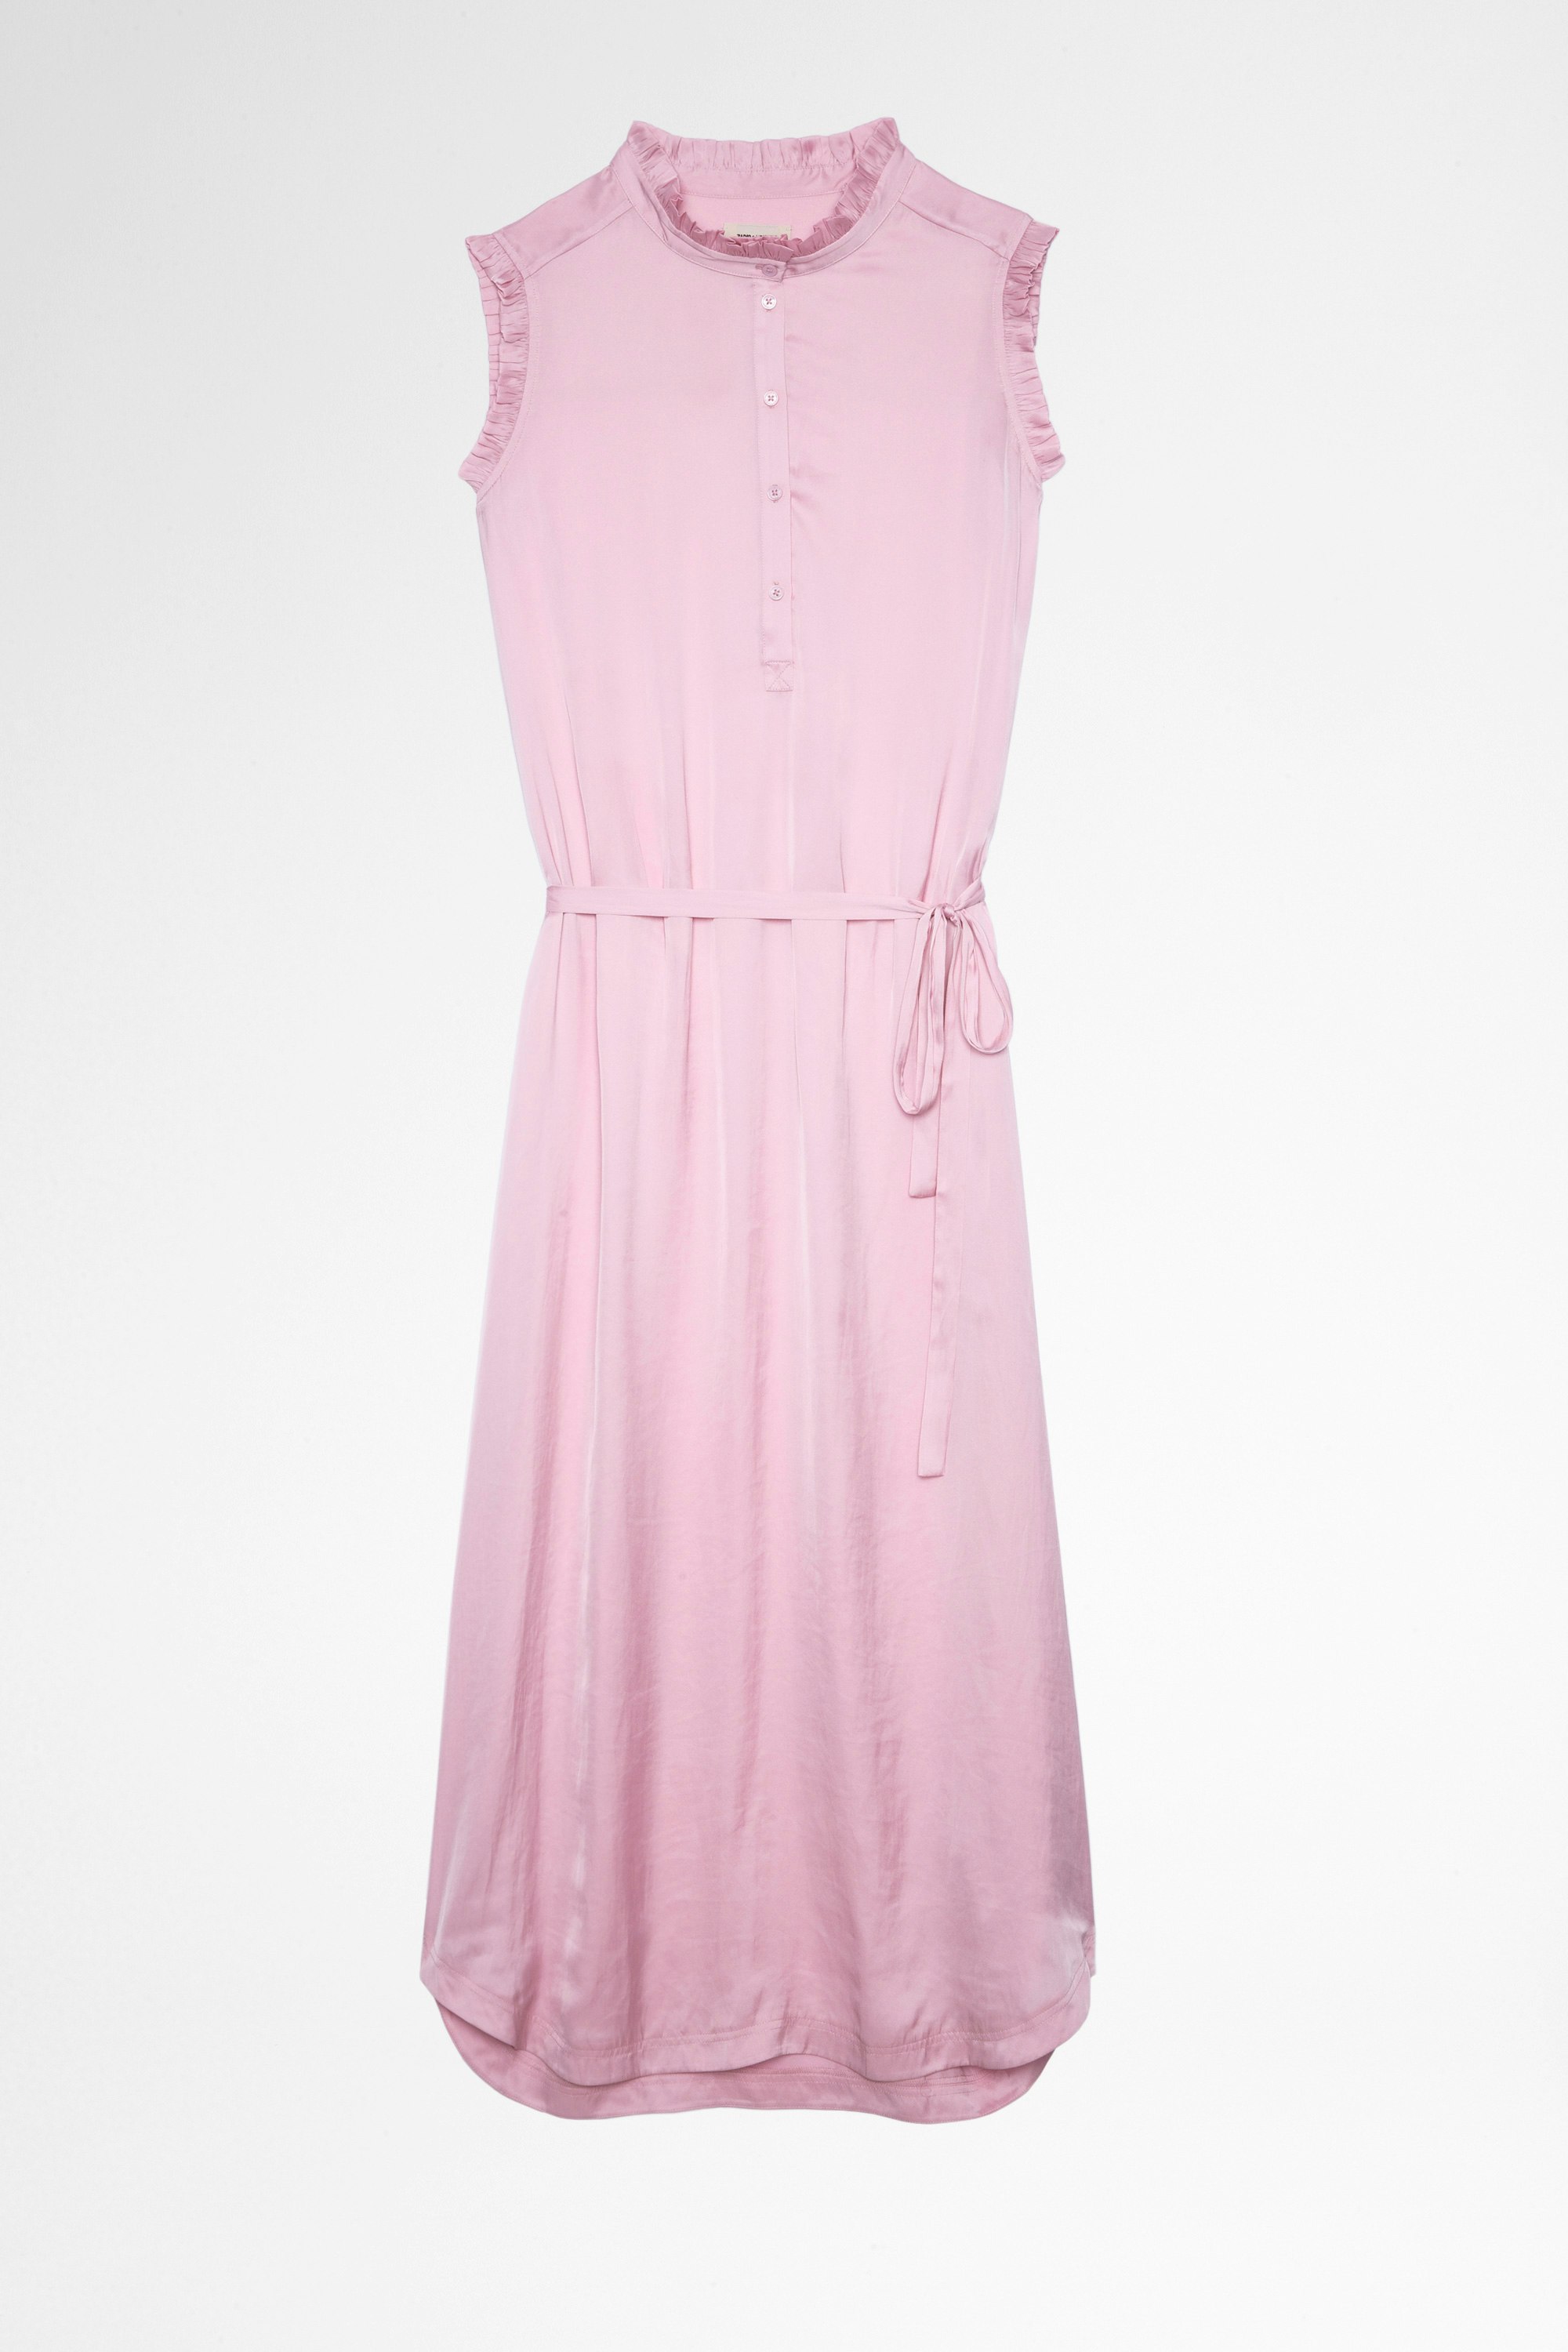 Raos ドレス Women's pink satin dress 